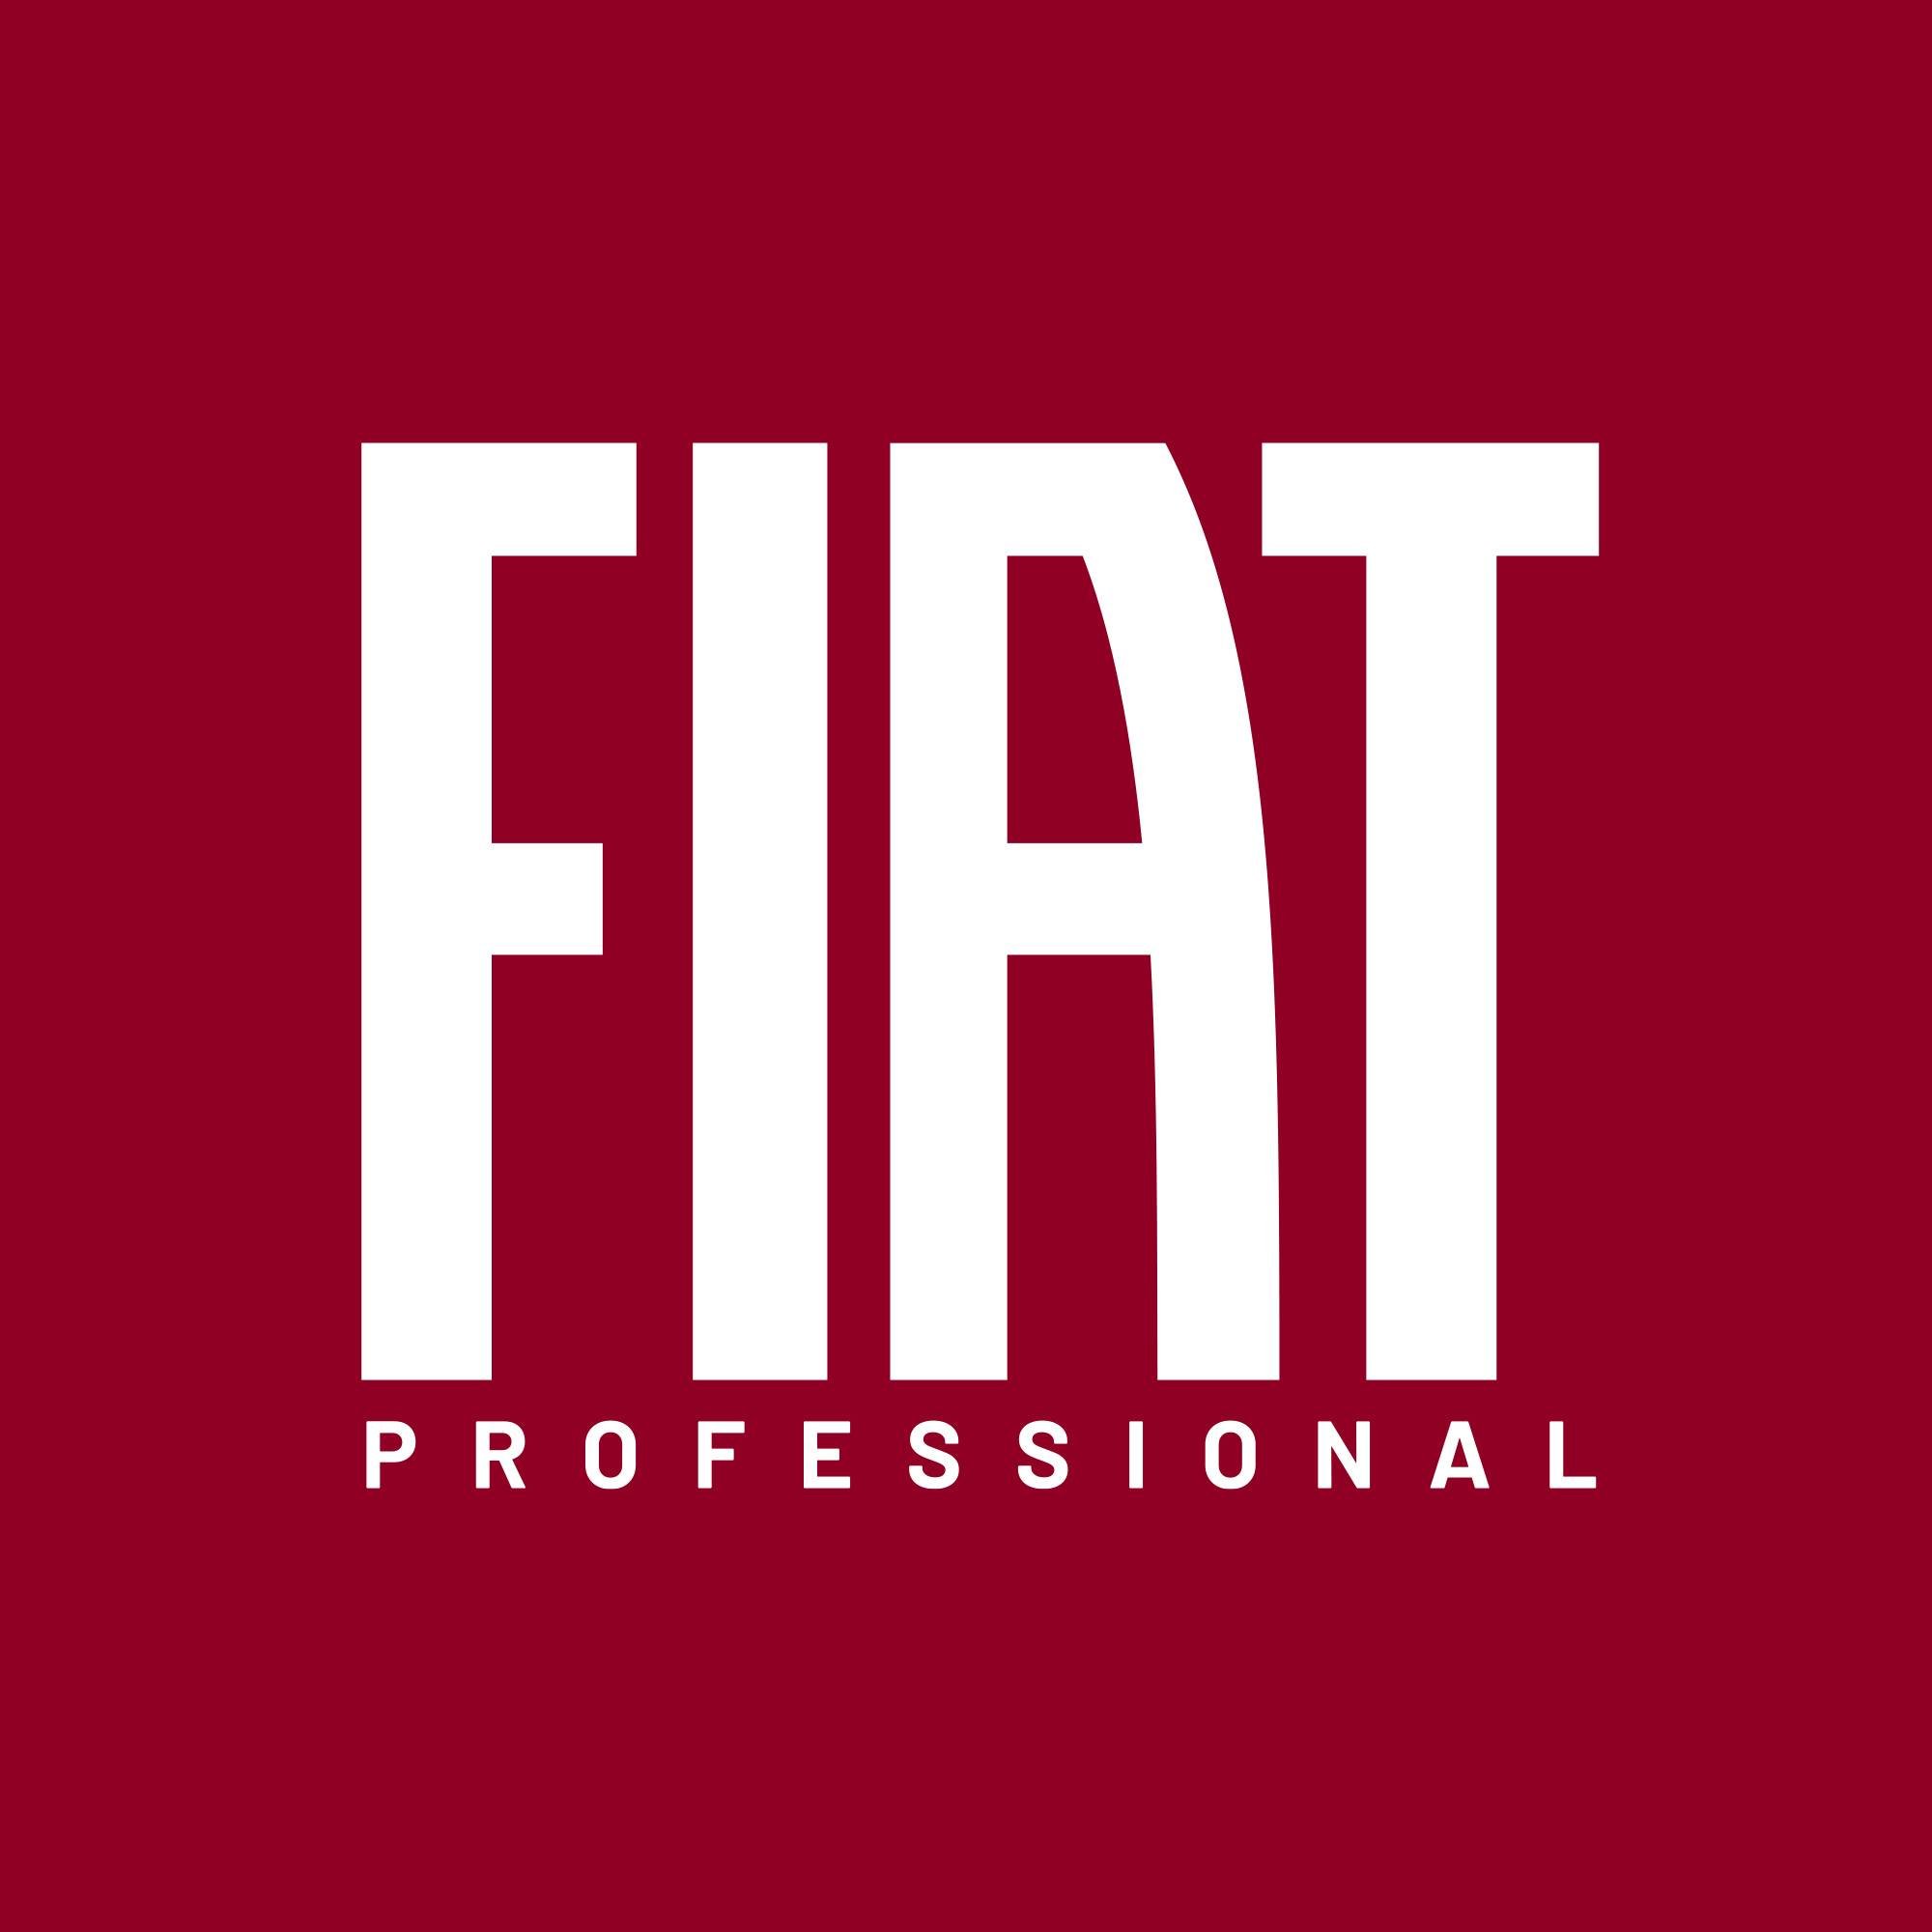 Fiat_Professional_Logo_2020.jpg